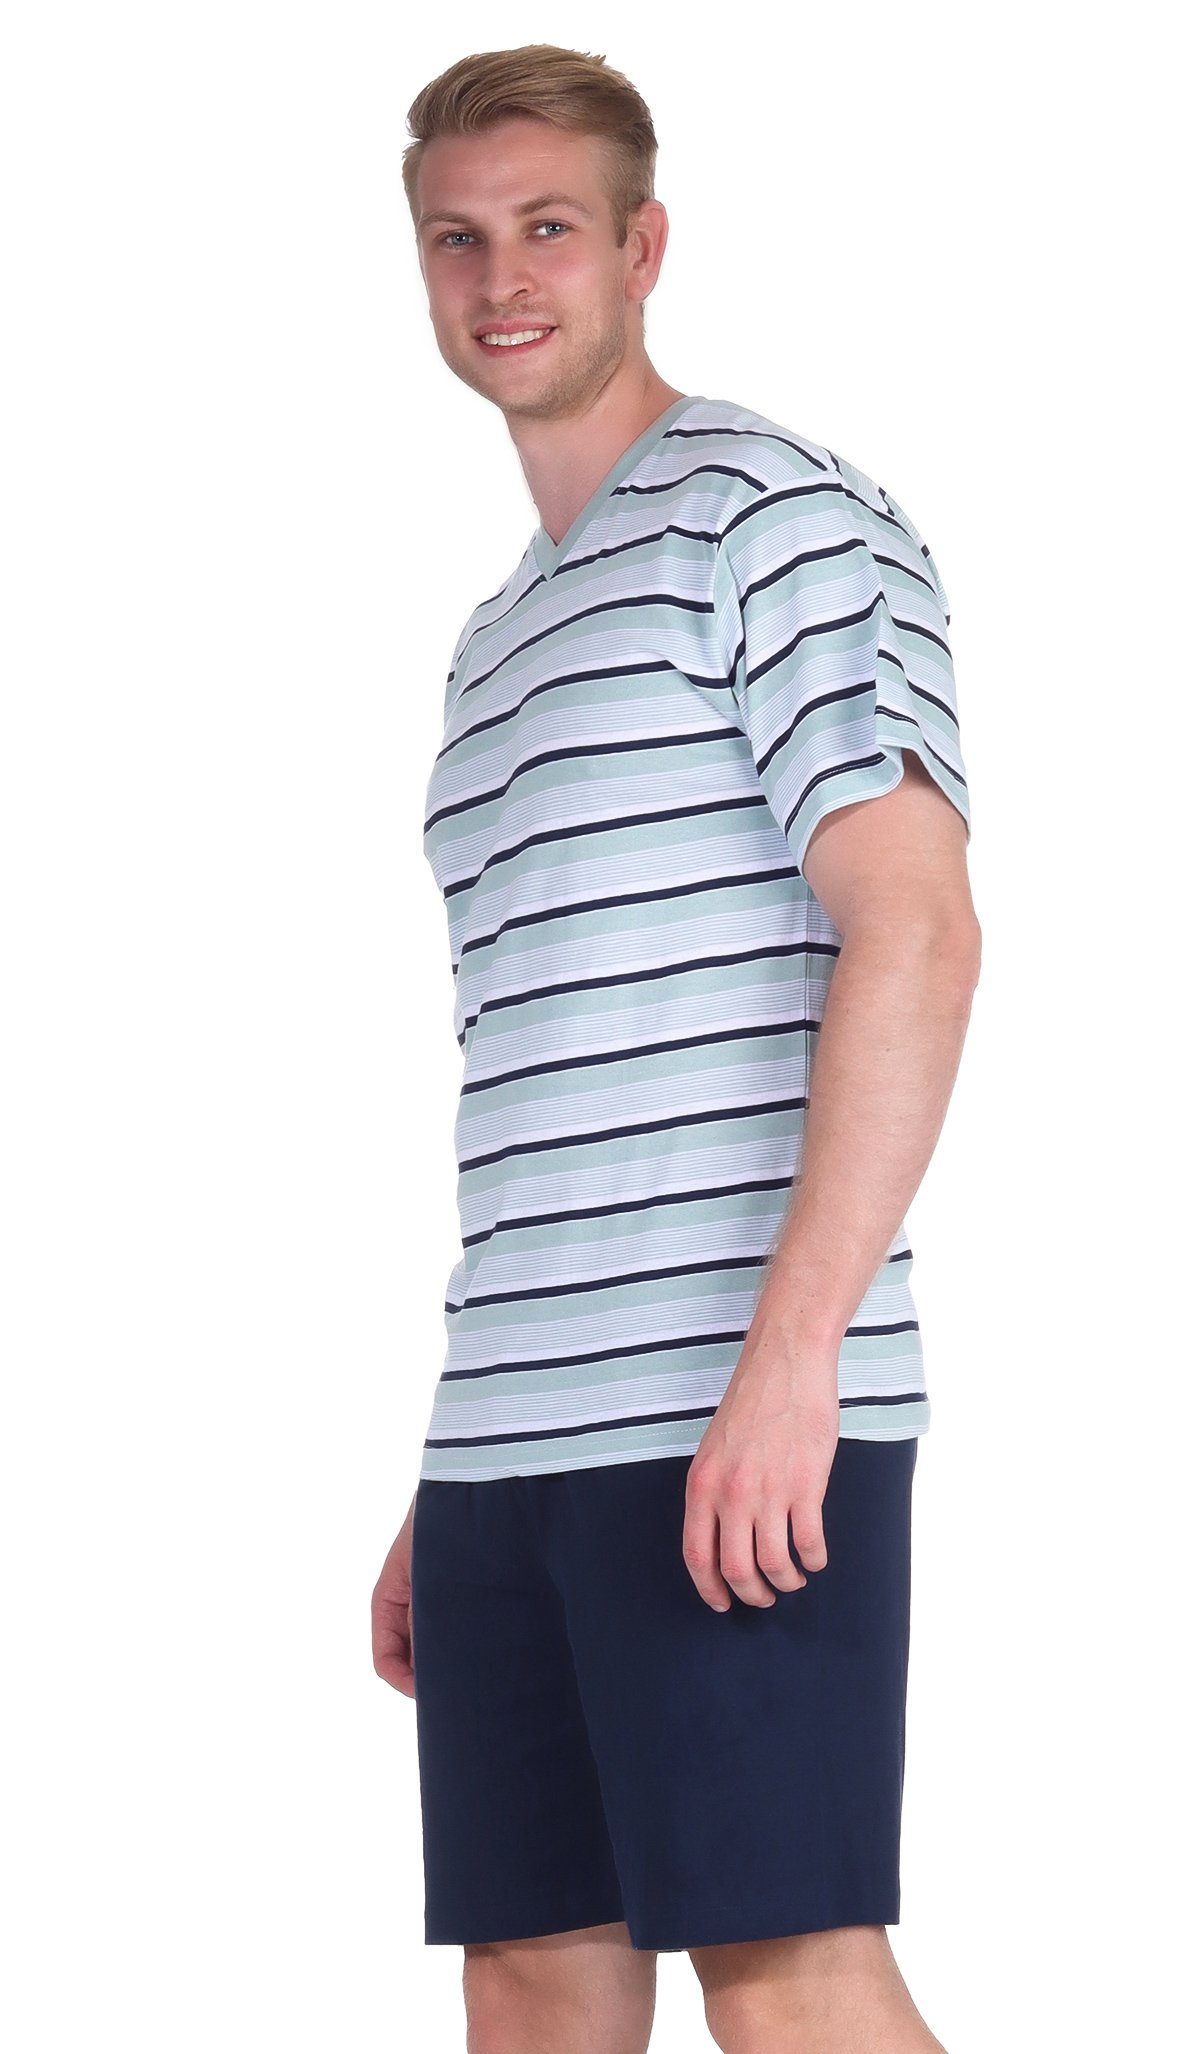 Shorty Moonline Aqua Kurzarm Baumwolle Shorty 100% Single-Jersey Schlafanzug mit Herren V-Ausschnitt